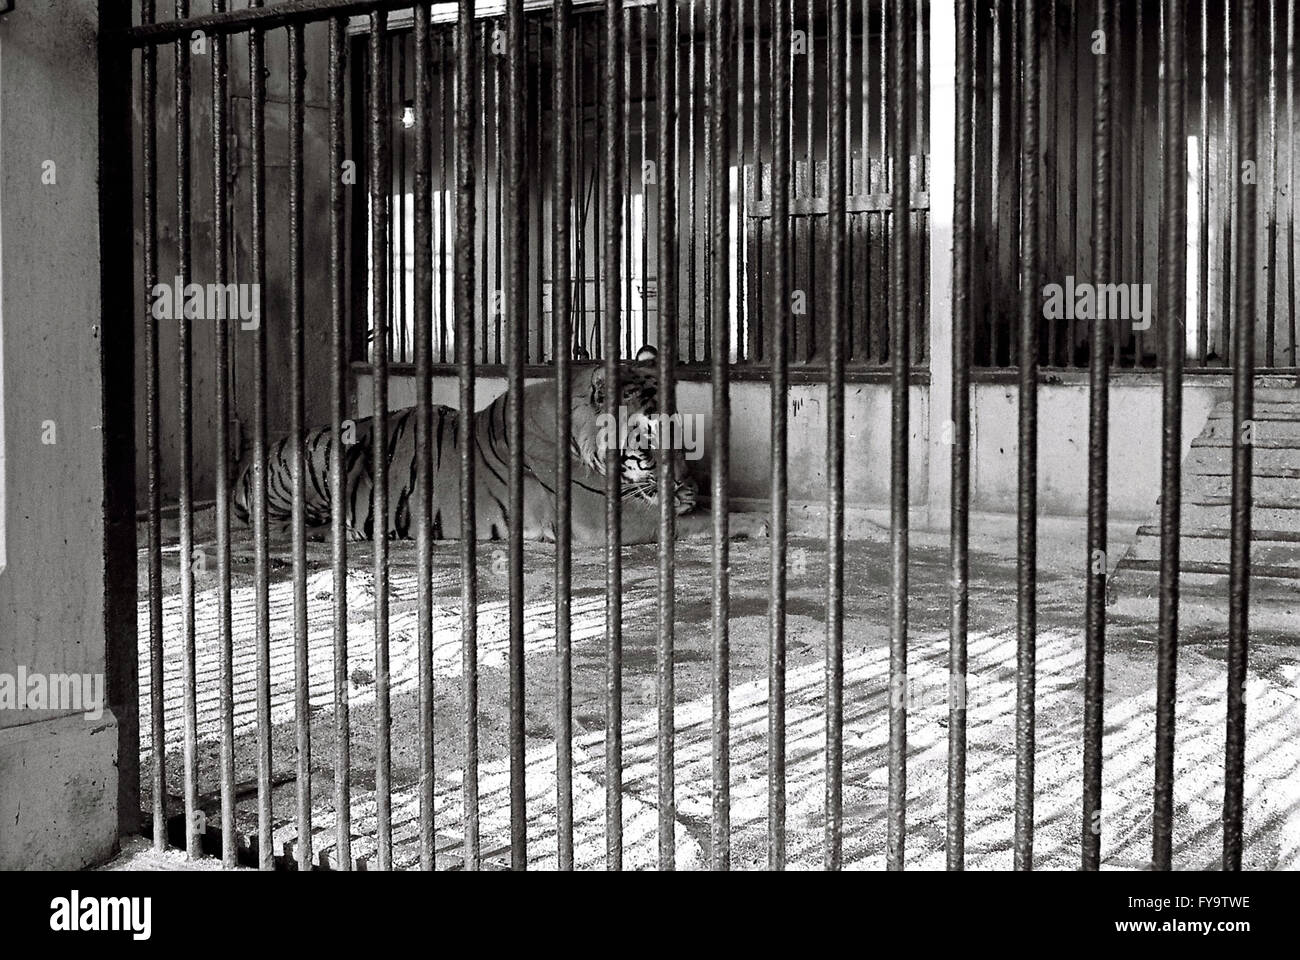 tiger enclosure Belle Vue zoo gorton manchester Stock Photo